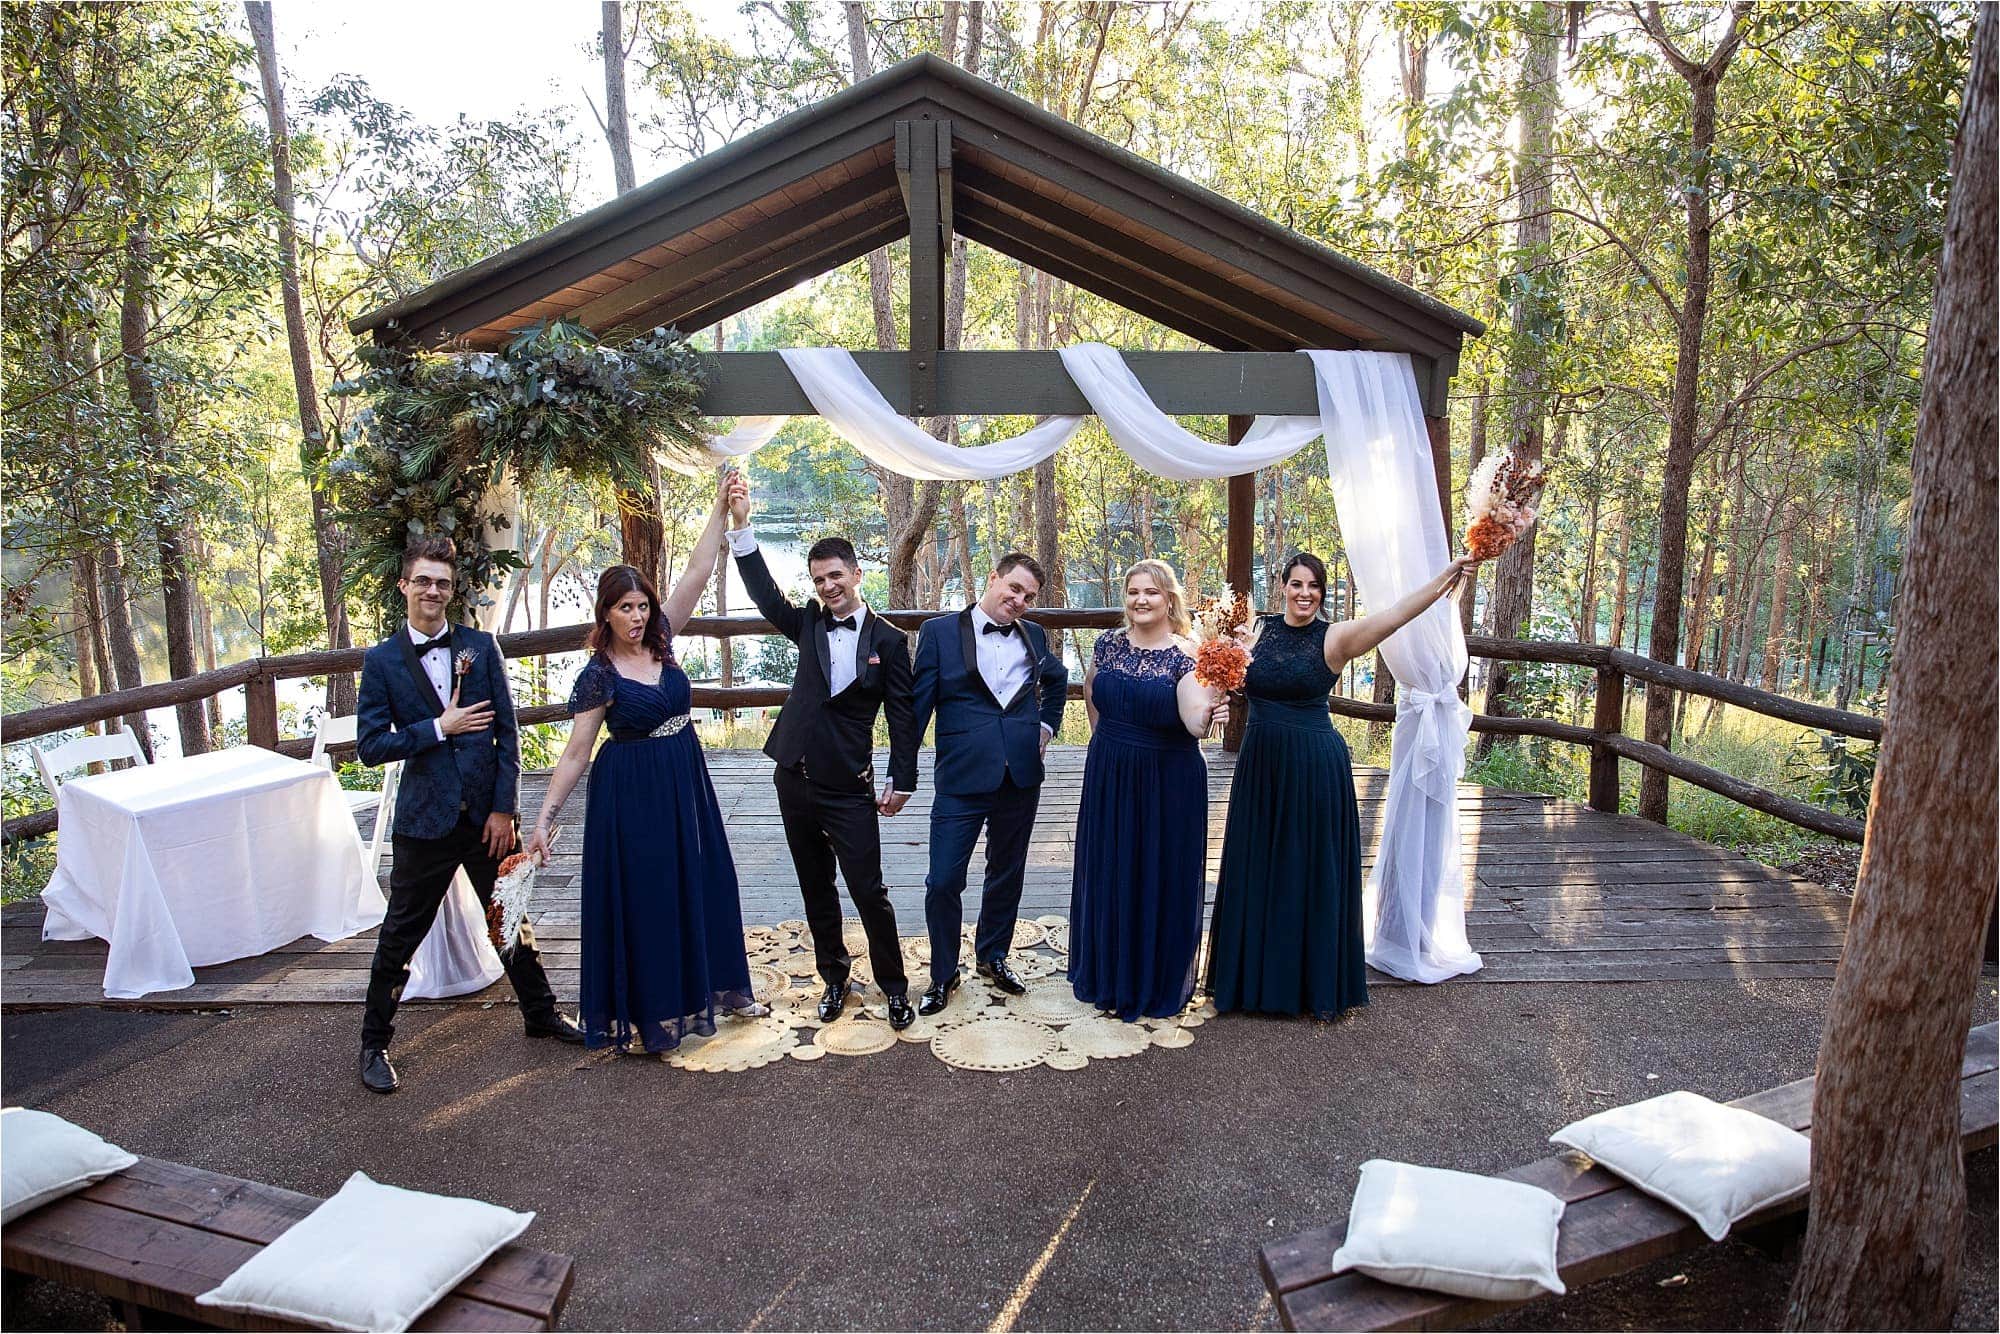 Walkabout Creek Wedding Bec Pattinson Photography